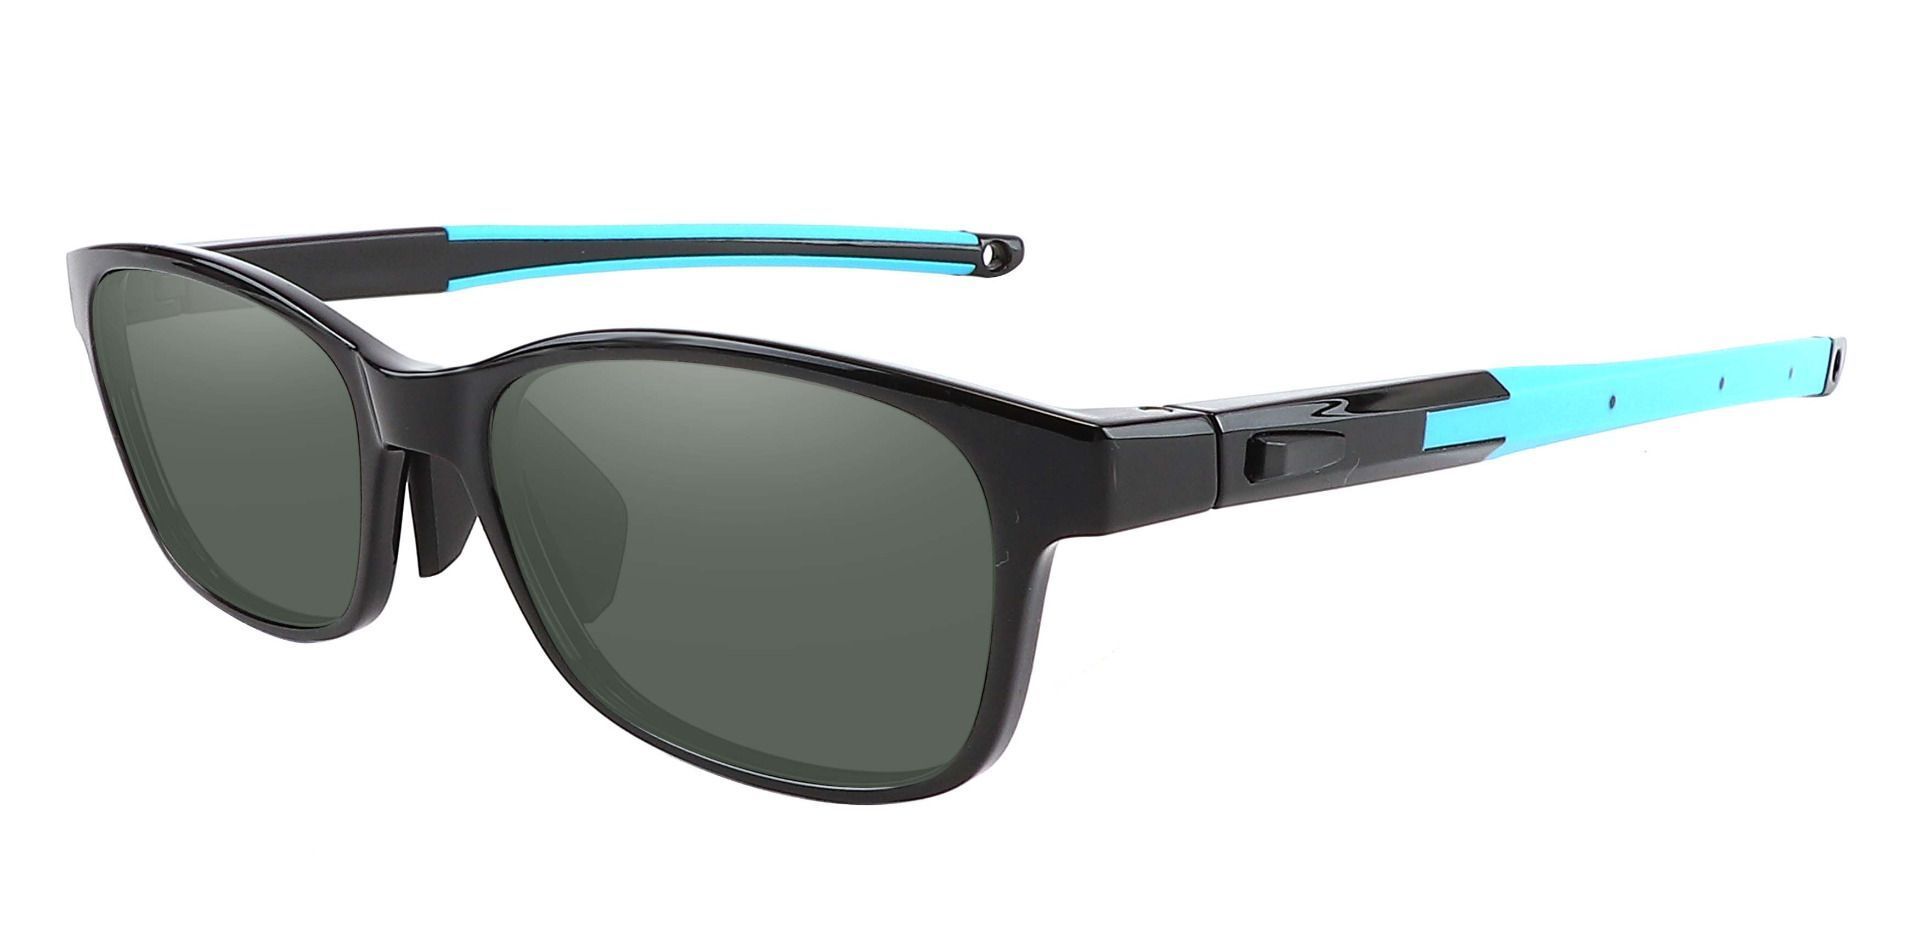 Higgins Rectangle Progressive Sunglasses - Black Frame With Green Lenses